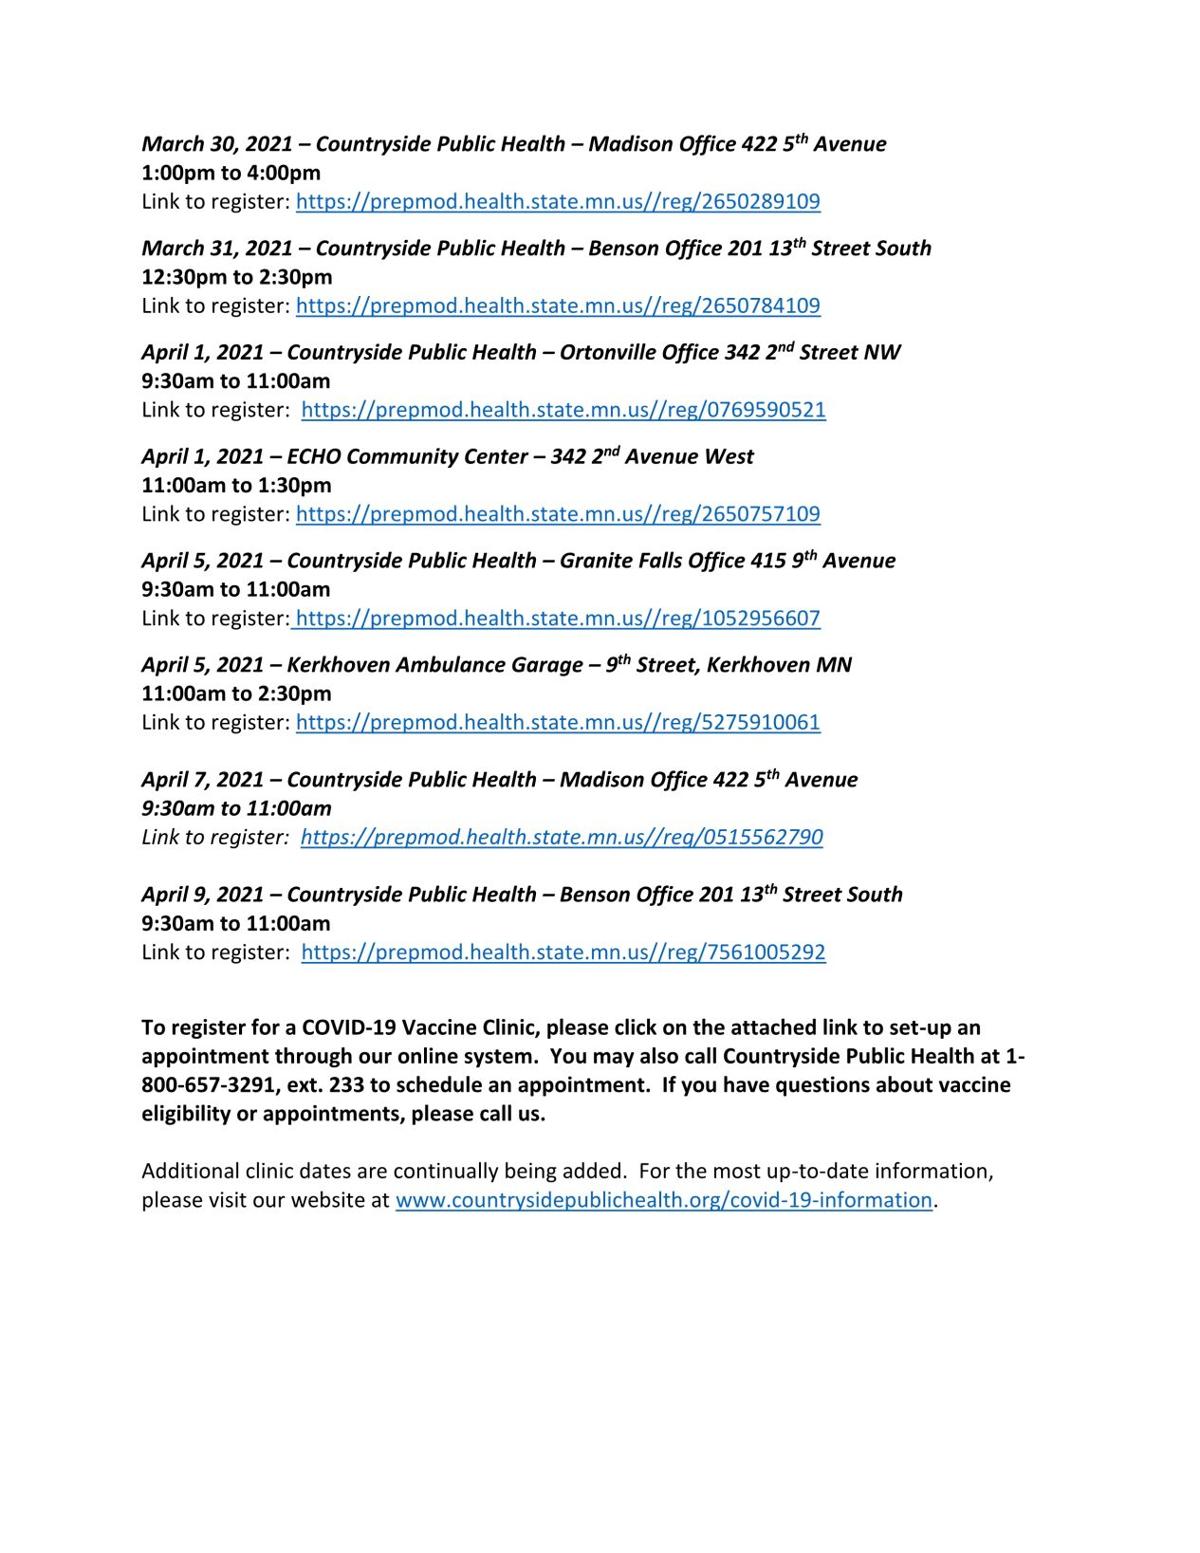 Countryside Public Health Covid-19 Vaccine Clinic Information Schedules Calendar Willmarradiocom